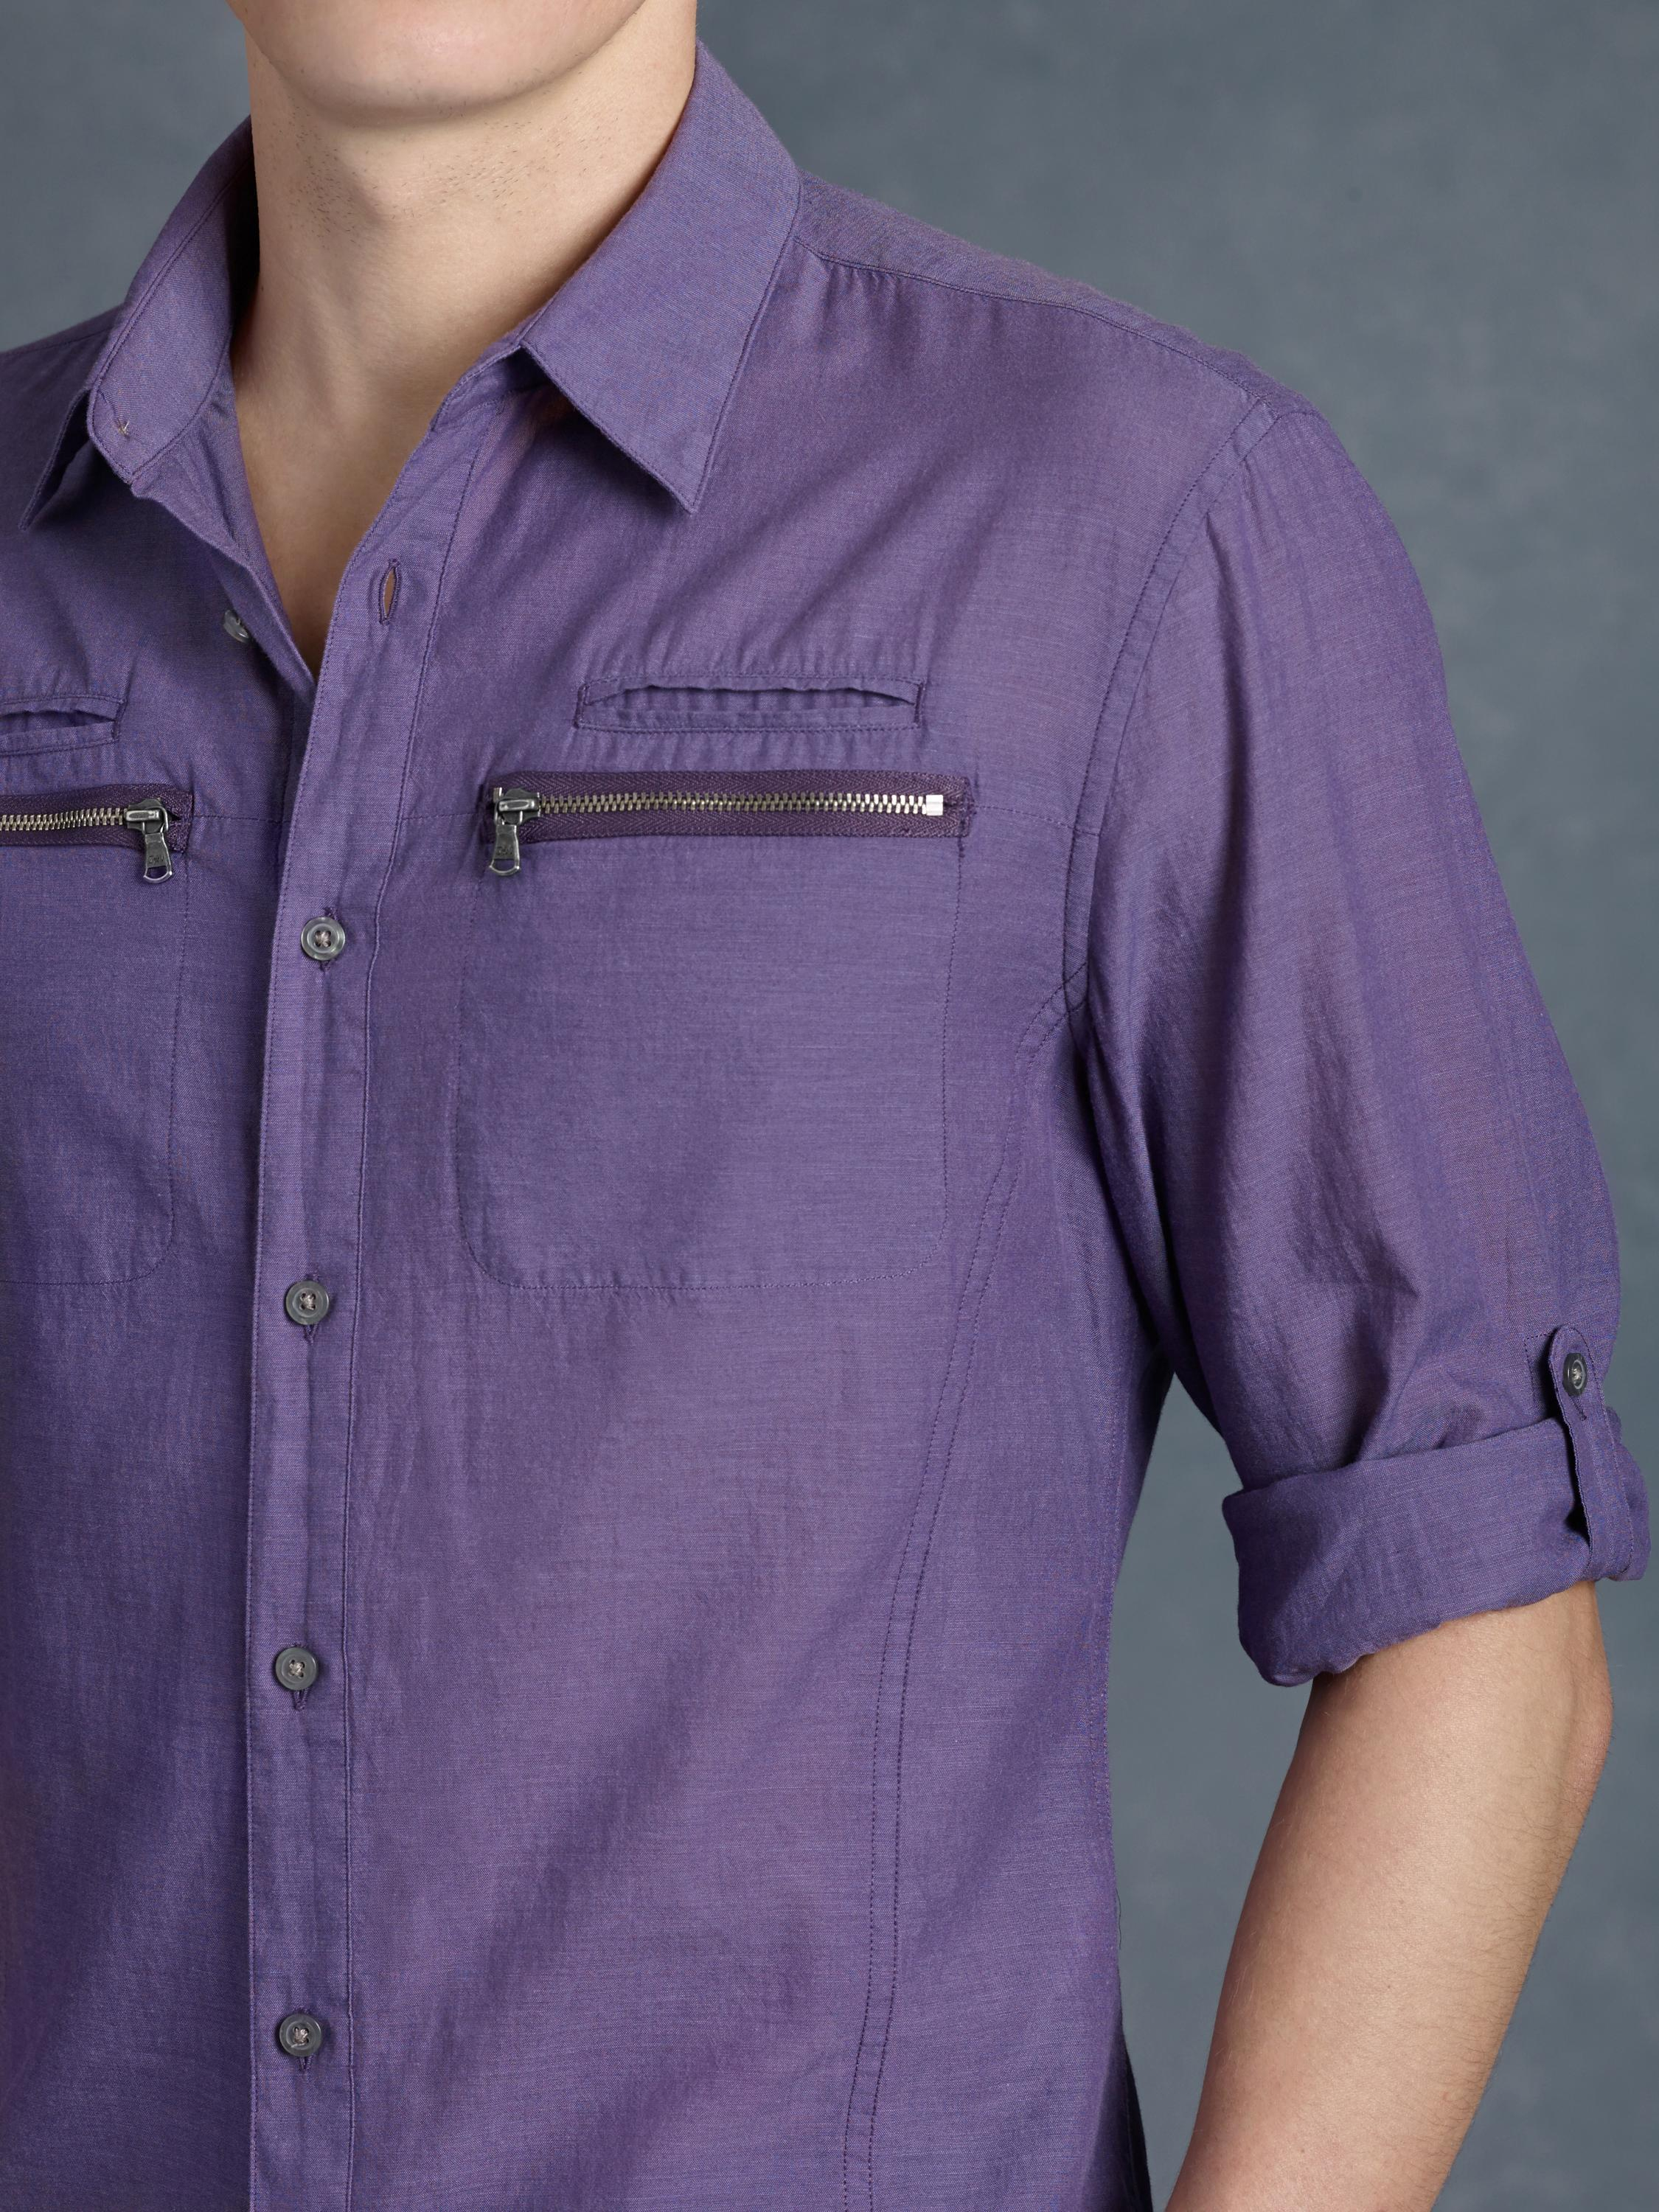 John varvatos Zipper Pocket Sport Shirt in Purple for Men | Lyst